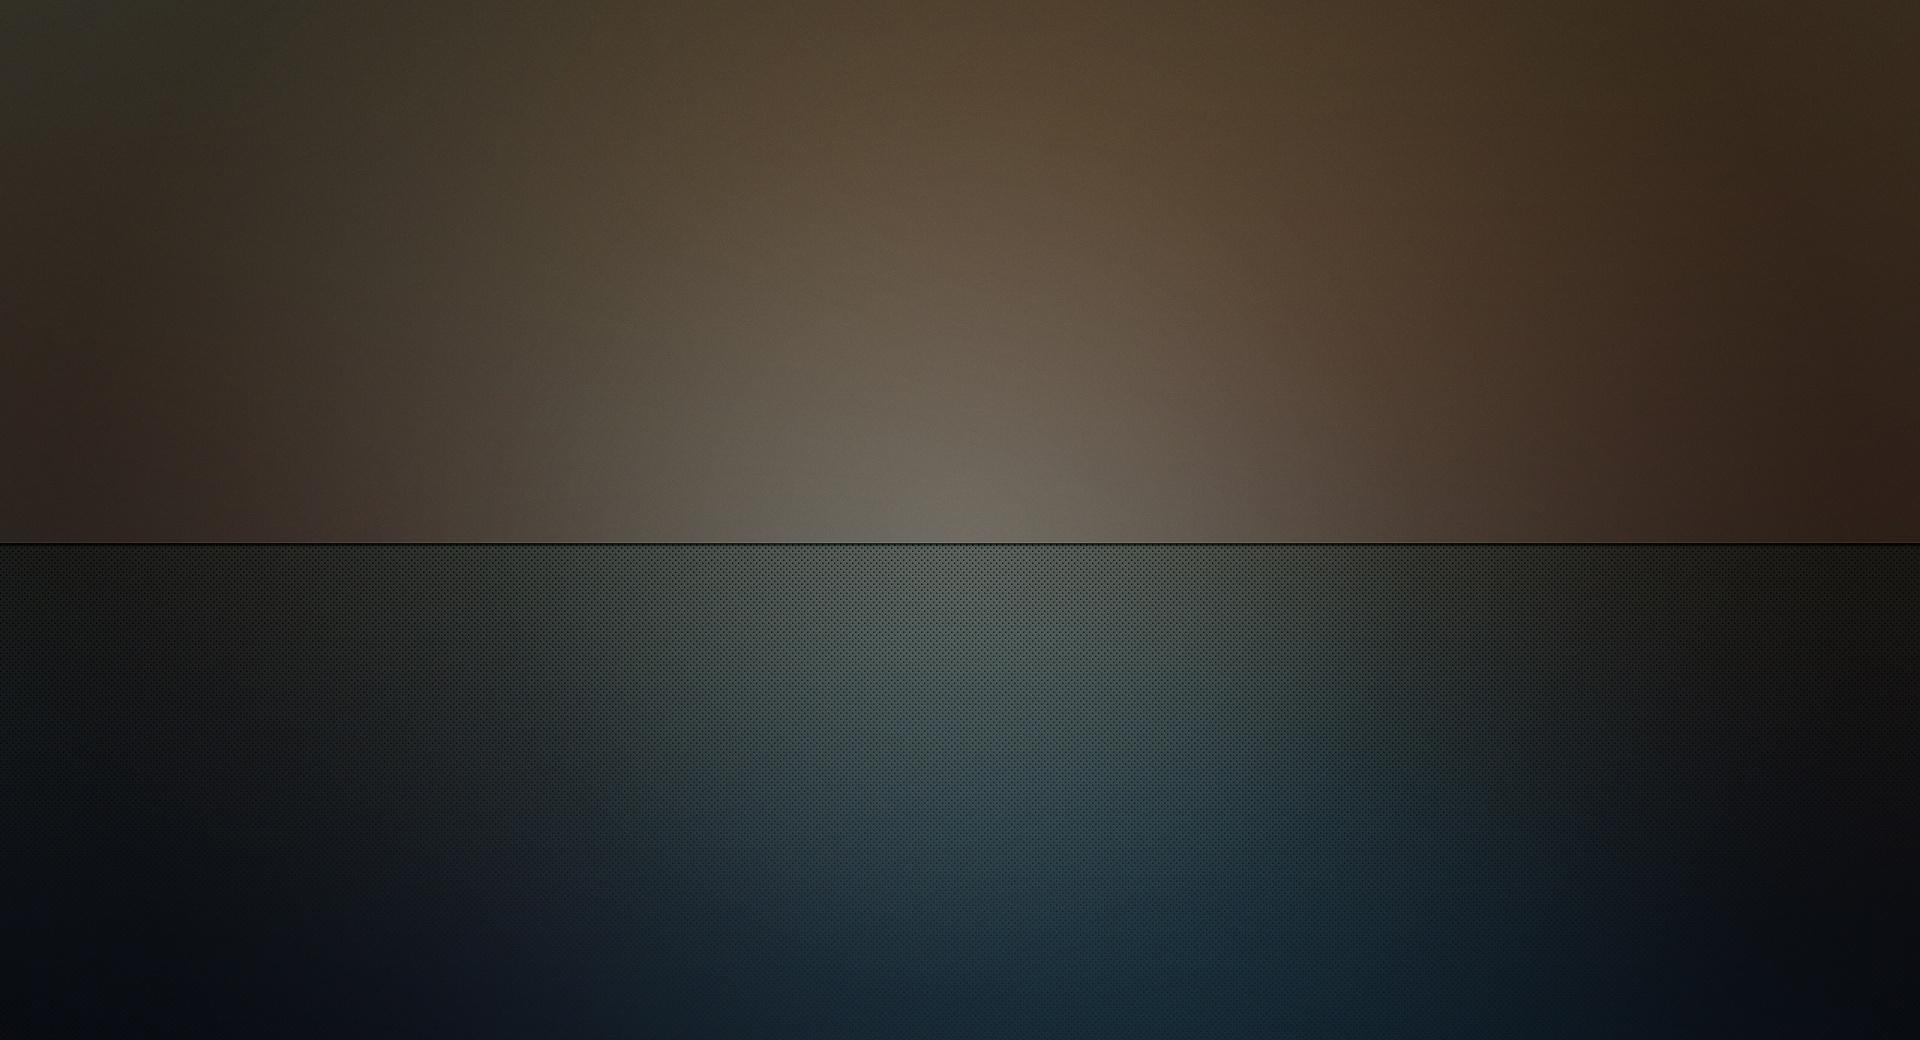 Minimalist Background at 2048 x 2048 iPad size wallpapers HD quality